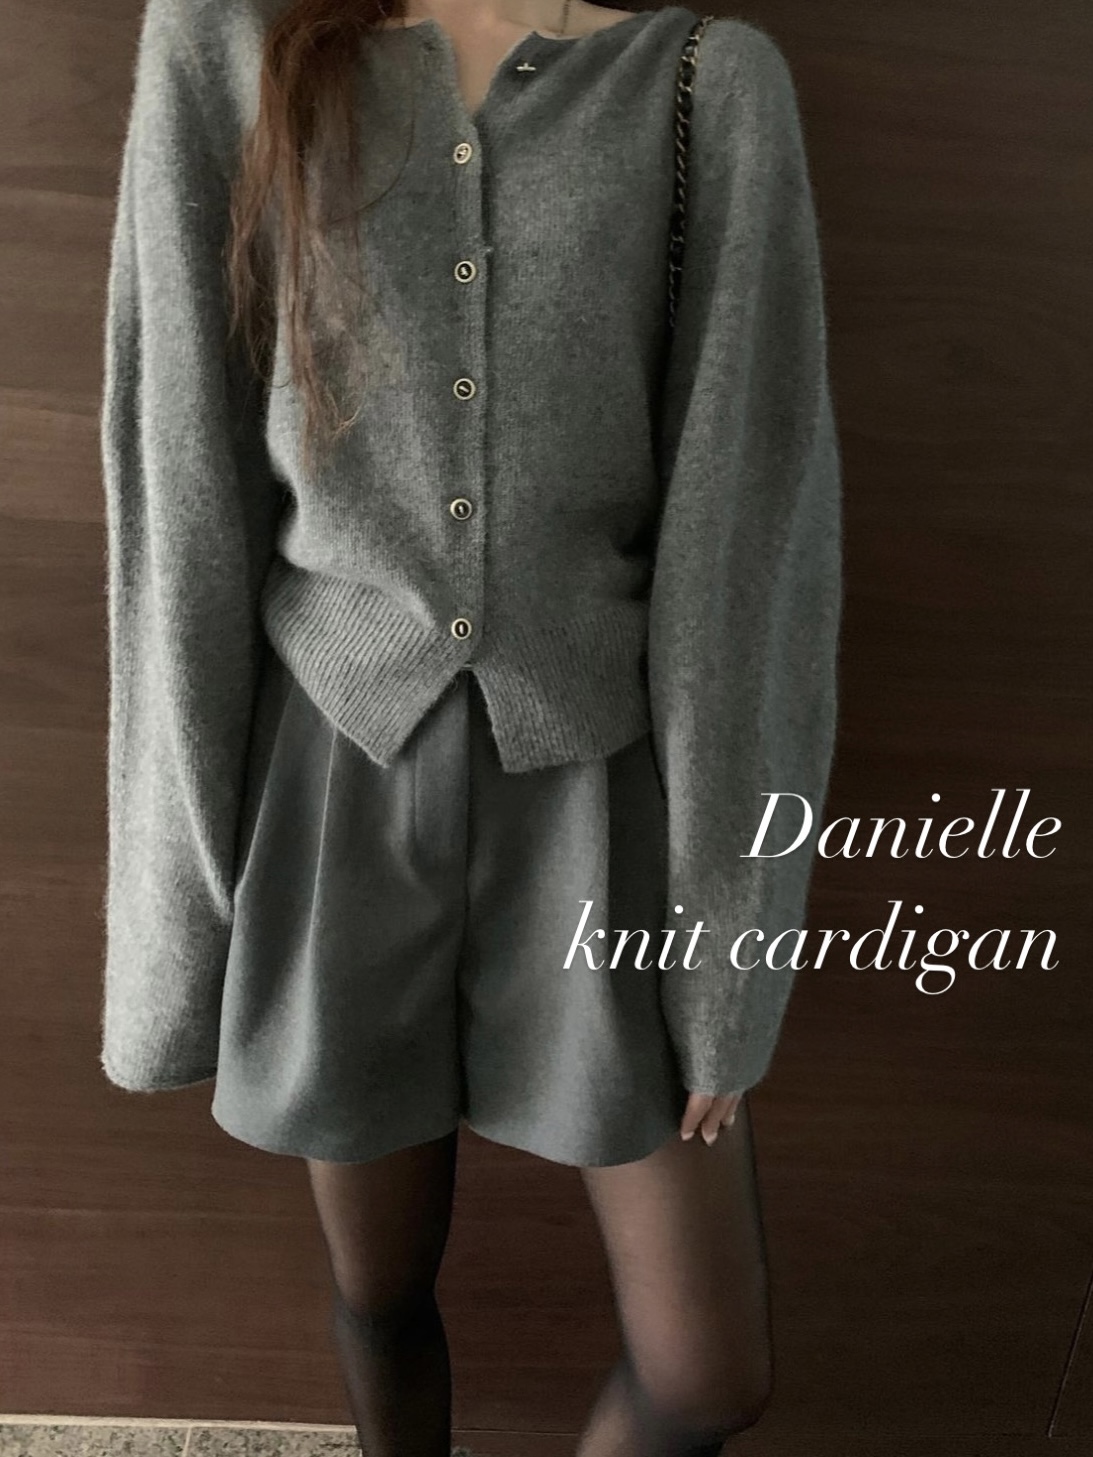 Danielle knit cardigan